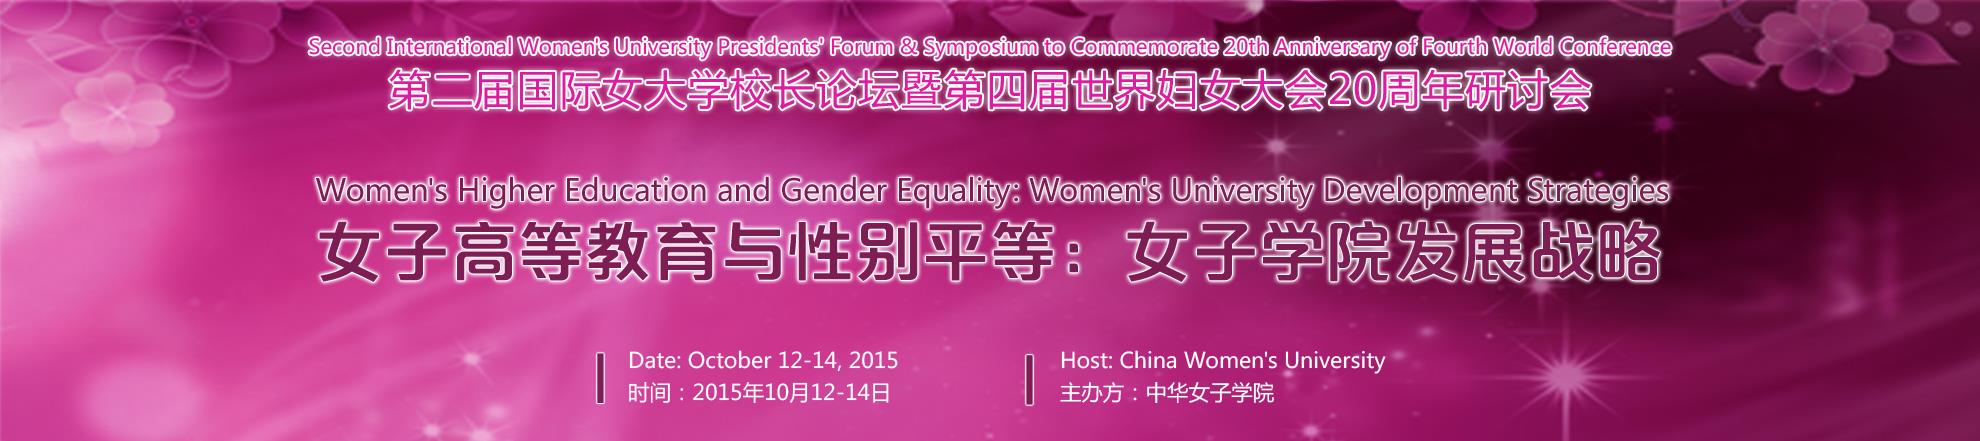 12-15 ottobre 2015 - con tre Alunne a Pechino Second International Women s University Presidents Forum & Symposium to Commemorate 20